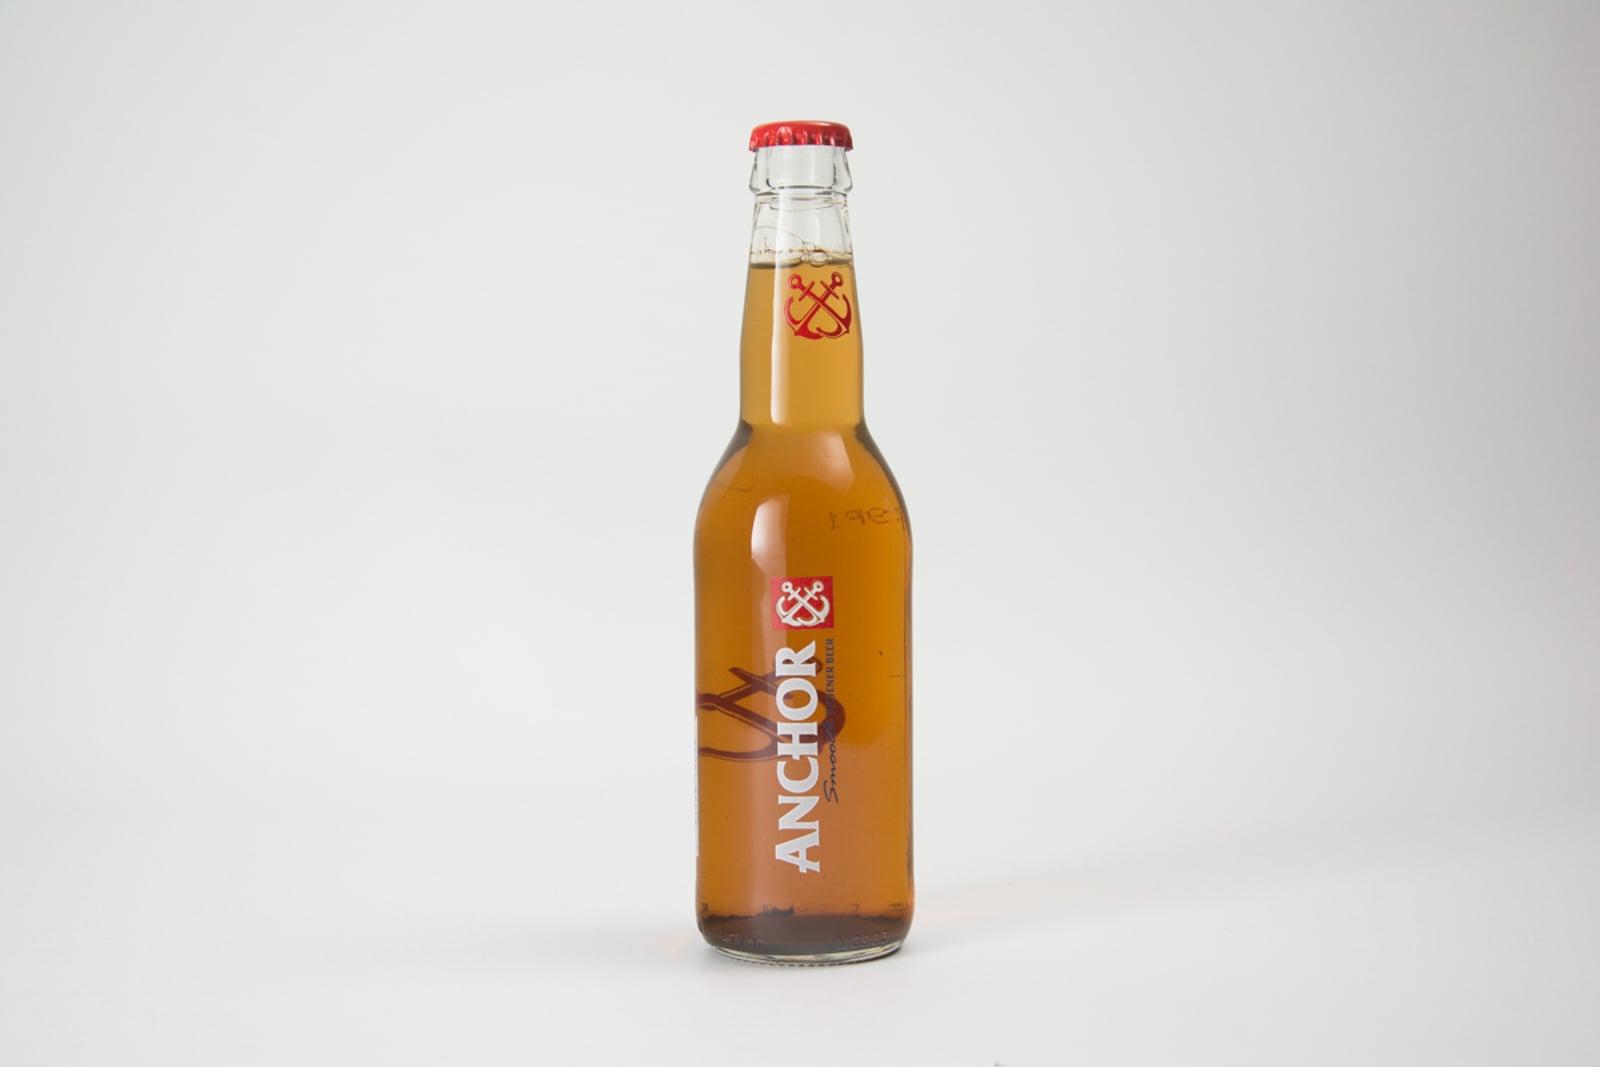 Anchor Smooth Pilsener Beer Bottle, 330 ml